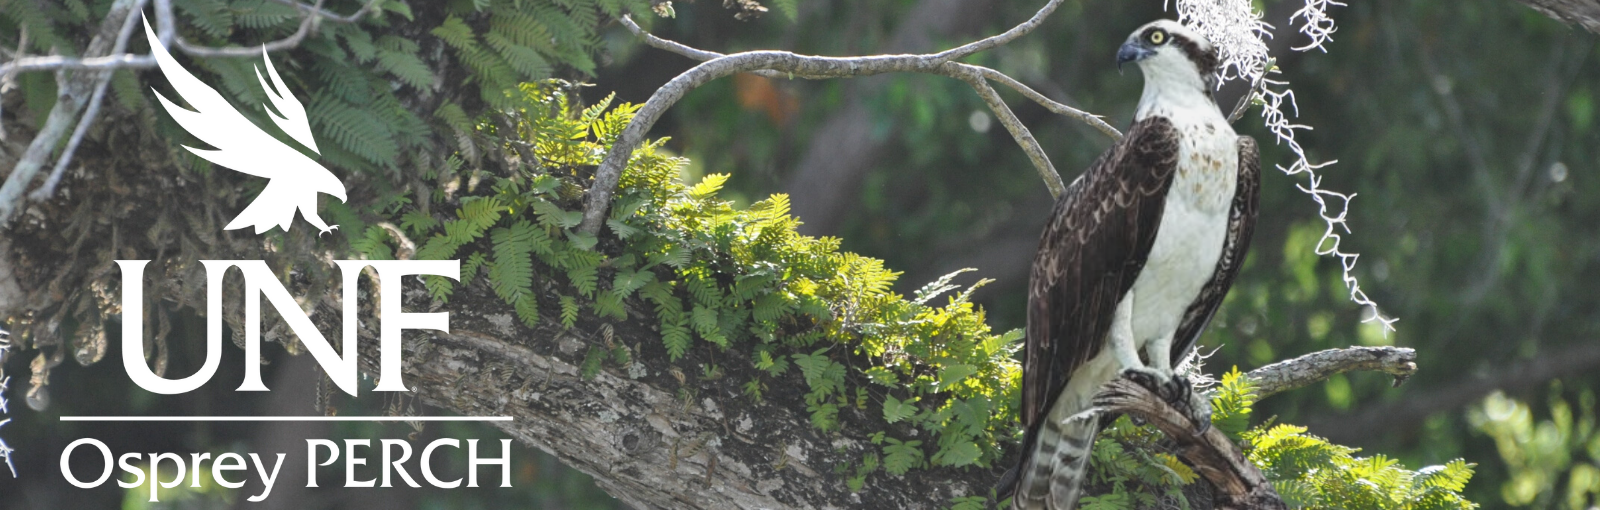 unf osprey perch with osprey in a tree